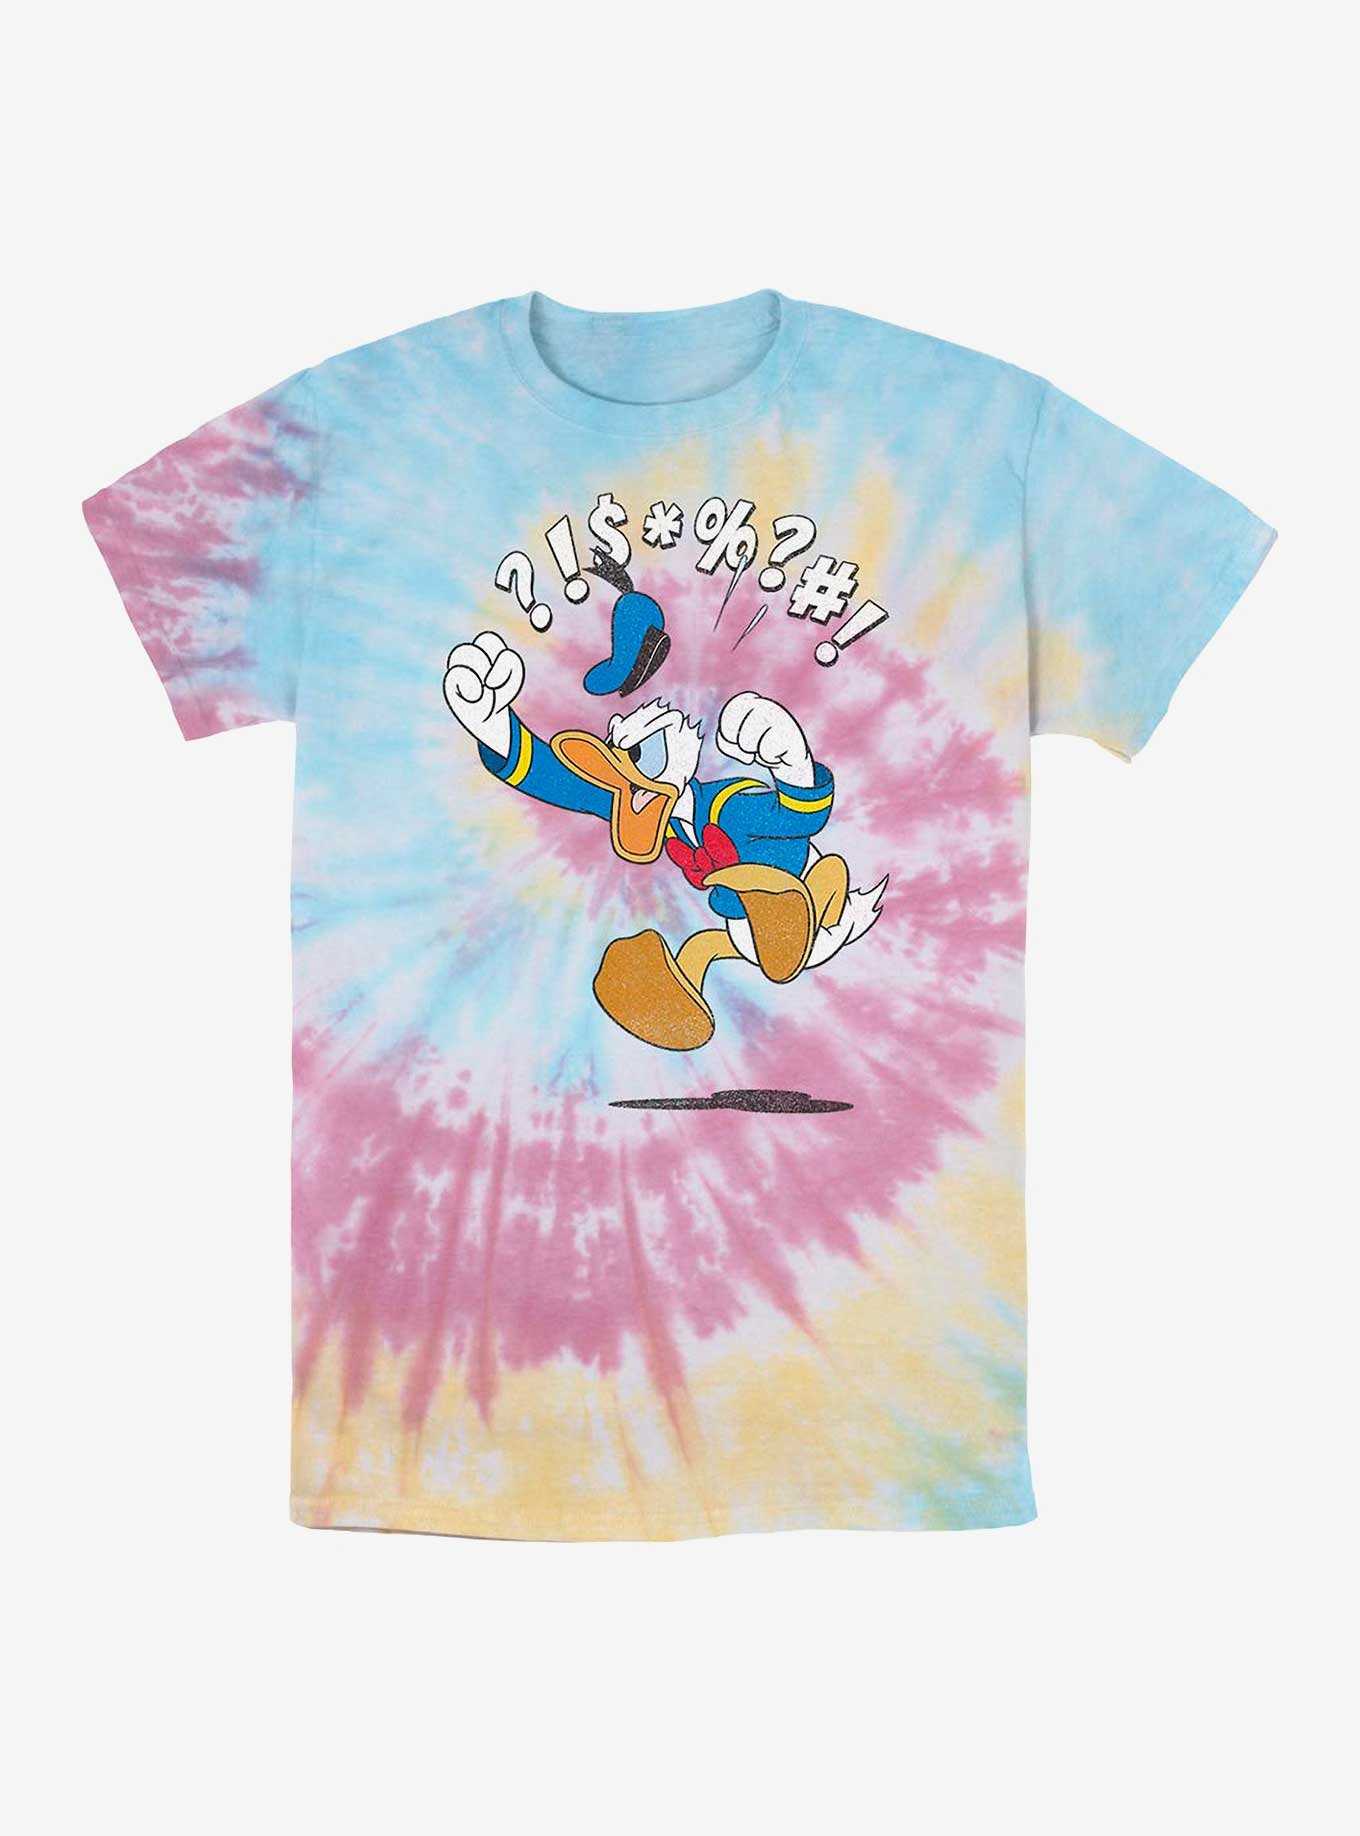 Disney Donald Duck Donald Mad Tie Dye T-Shirt, , hi-res